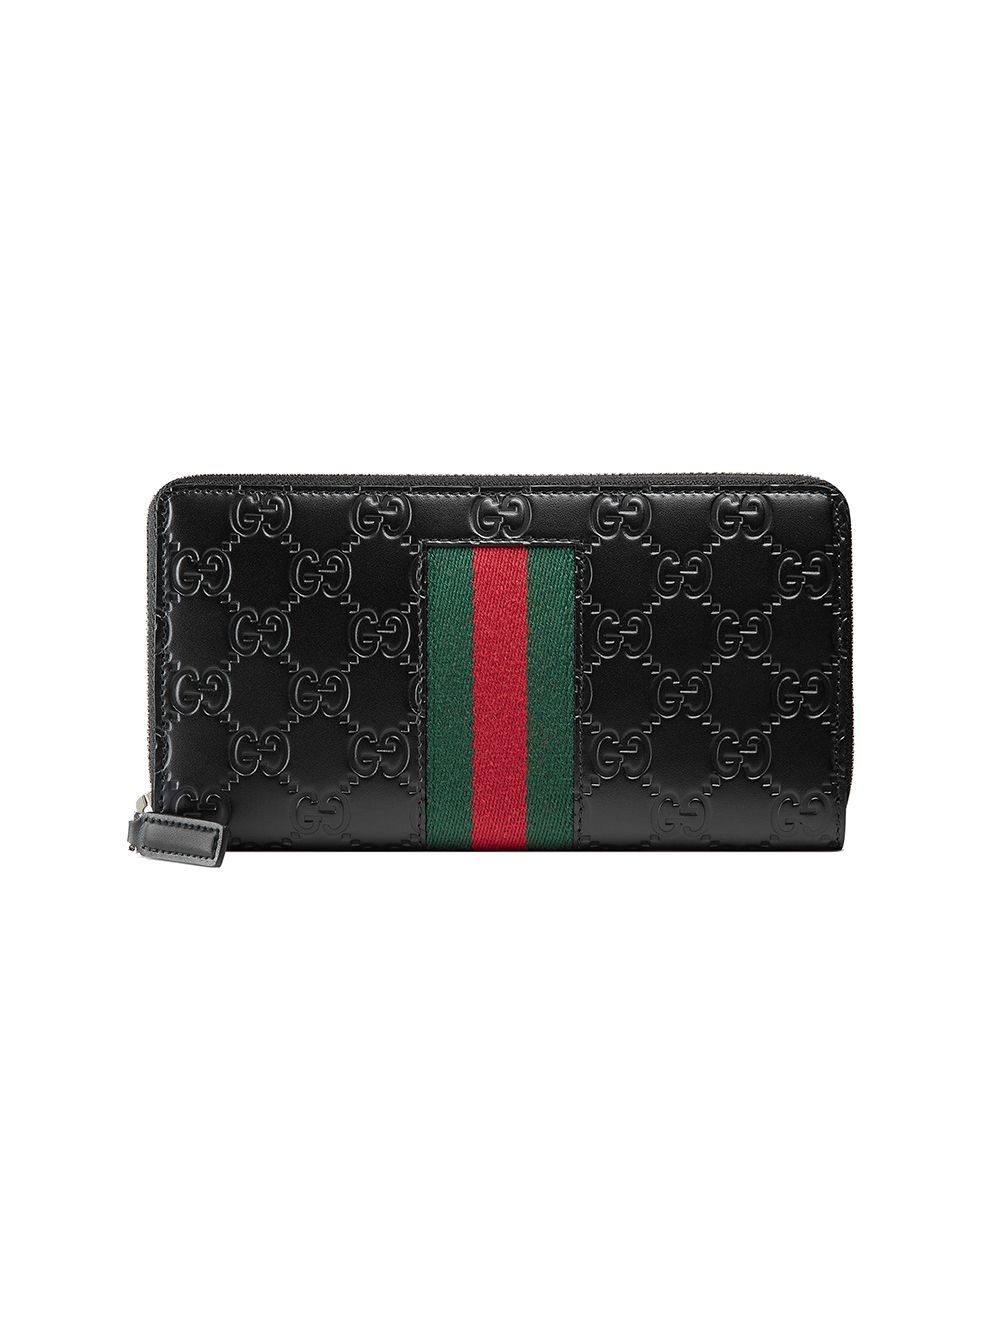 Gucci Signature Web wallet - Black | FarFetch US